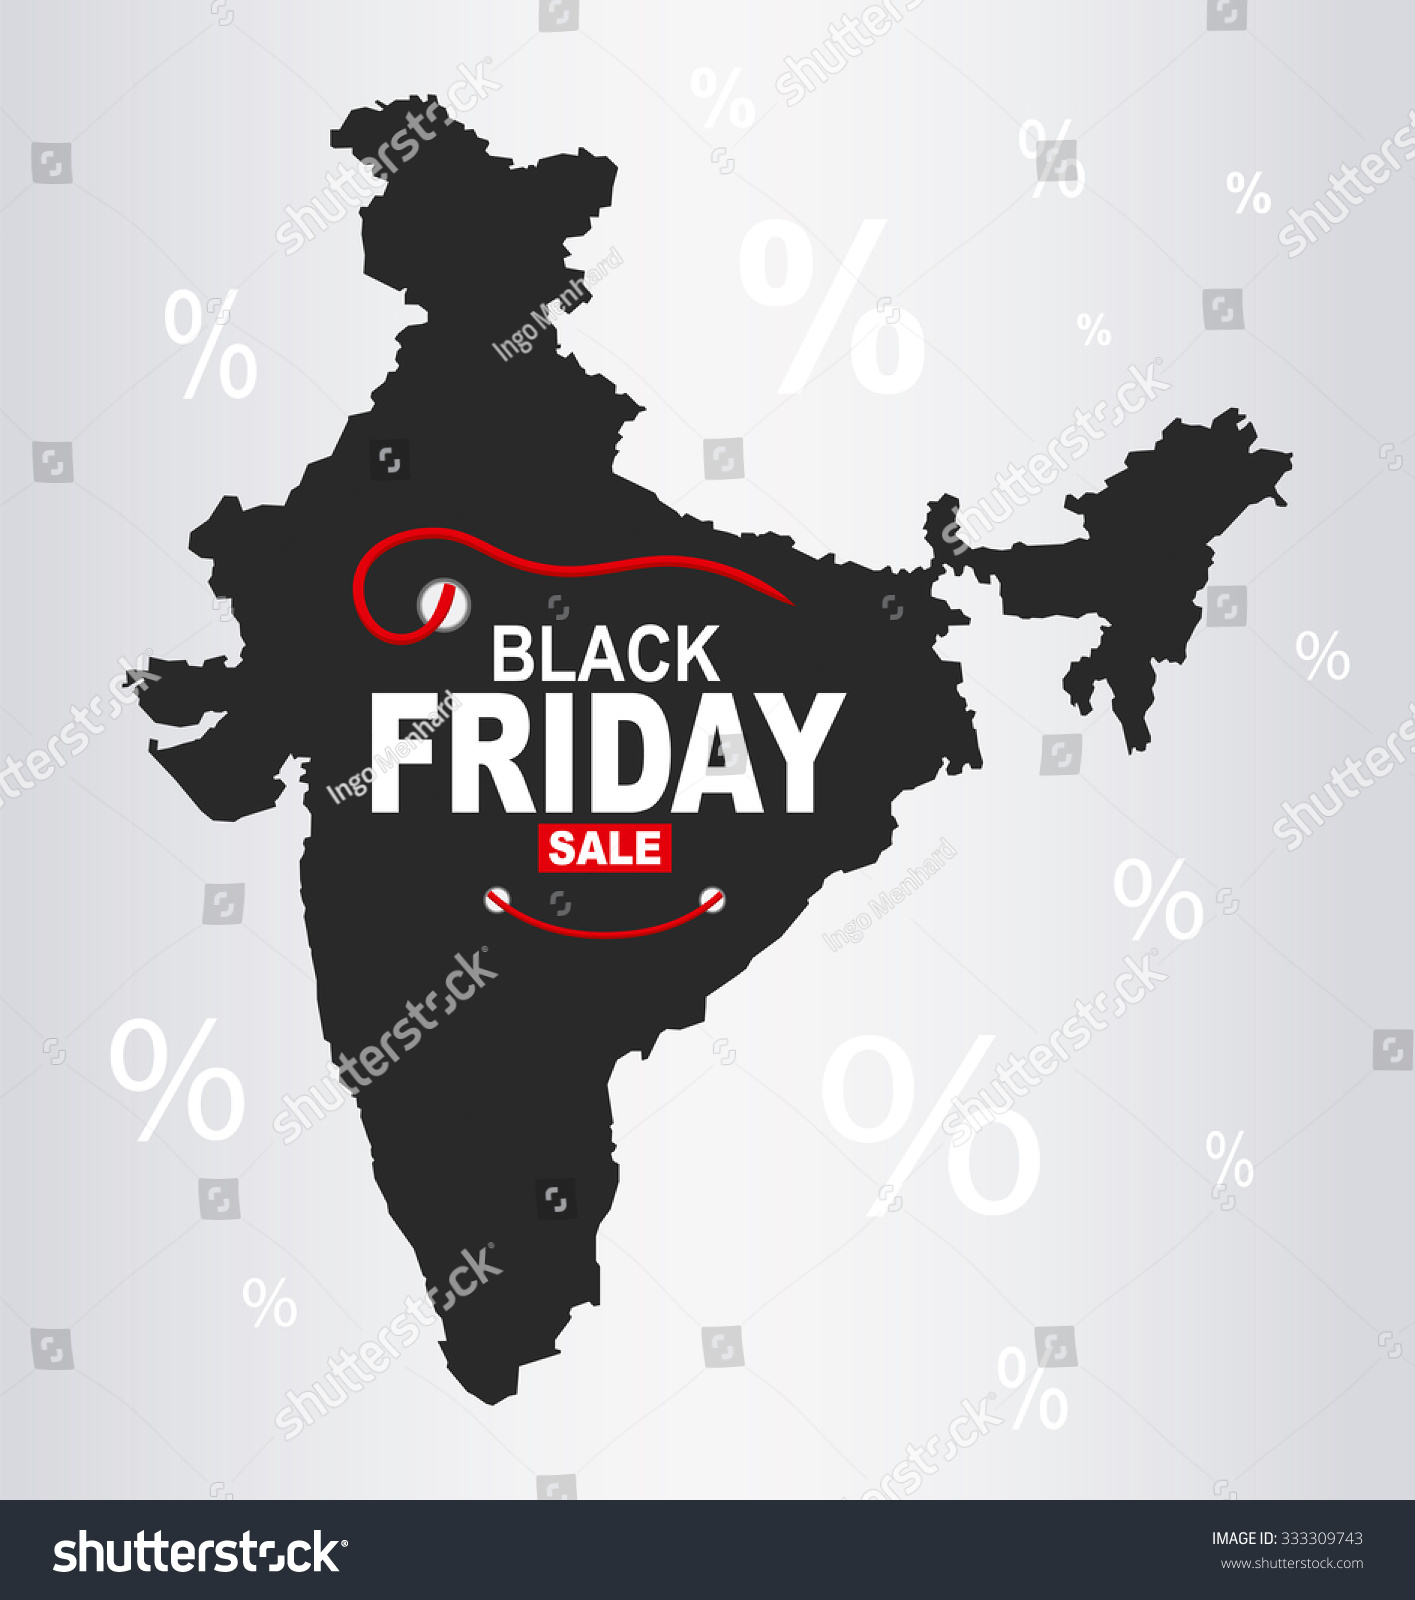 Black Friday Map India Stock Vector Royalty Free 333309743